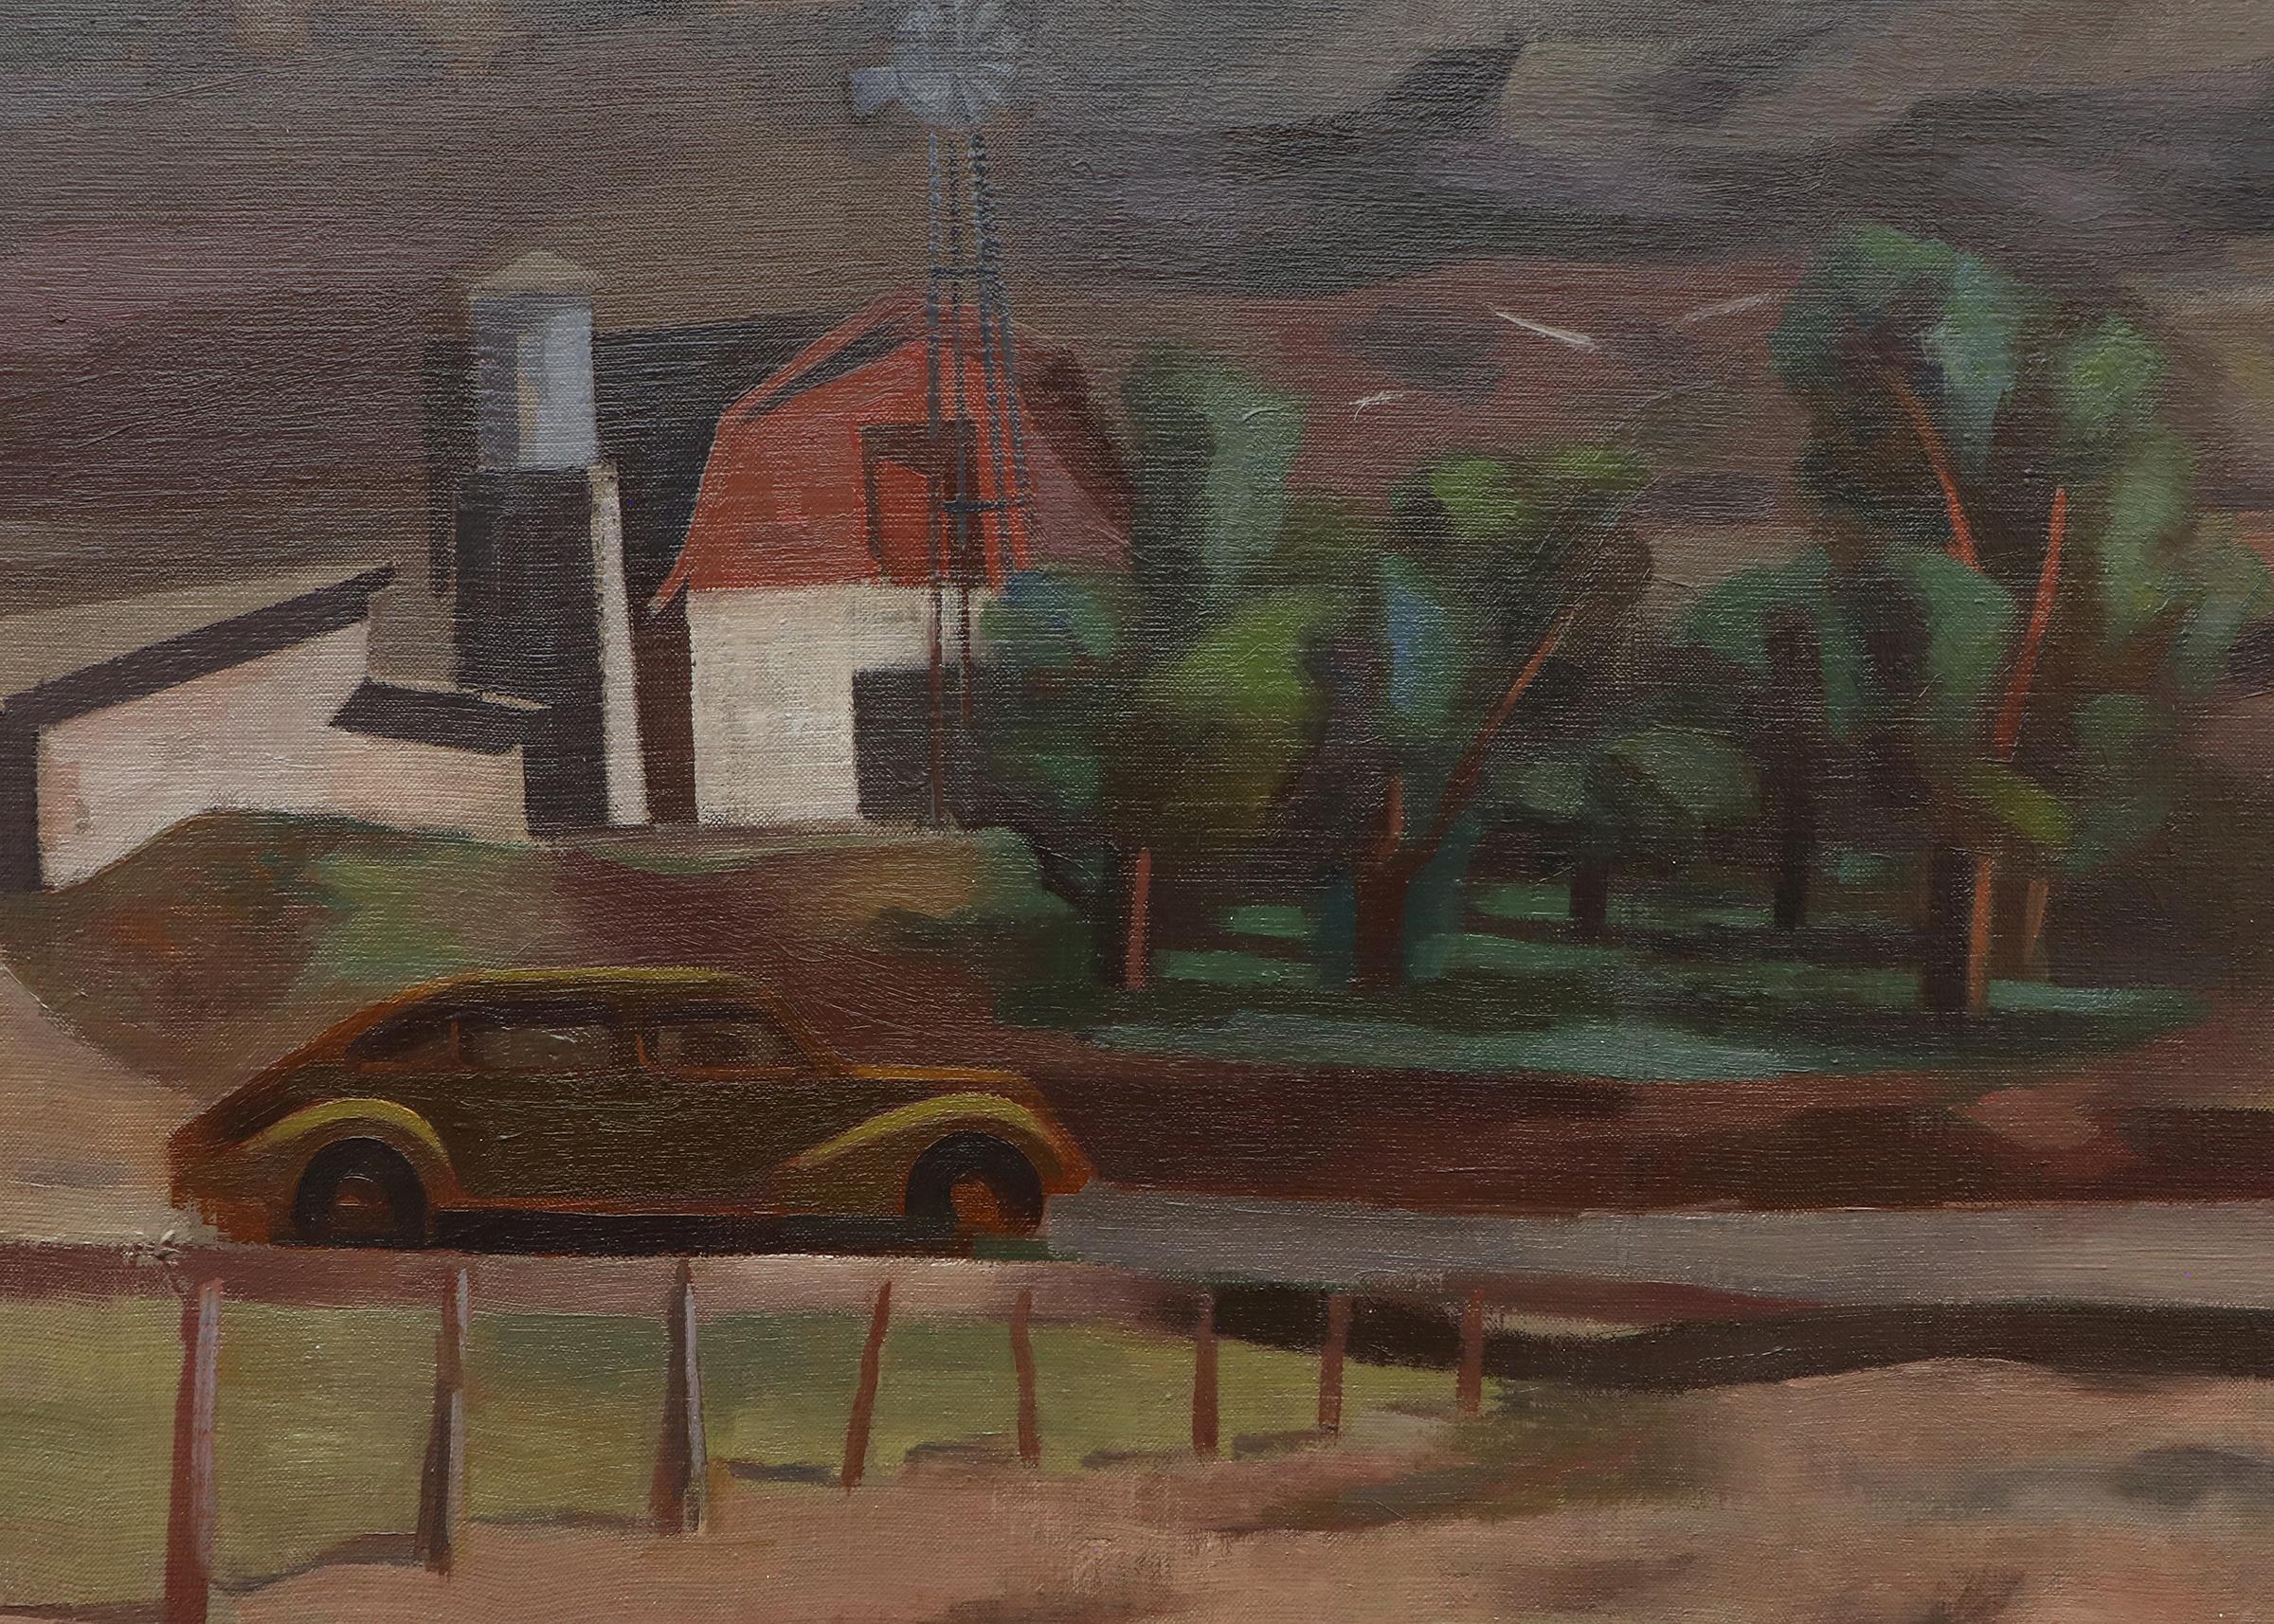 The Hillside, Colorado, 1930s Landscape Oil Painting, Hillside Farm with Truck 3